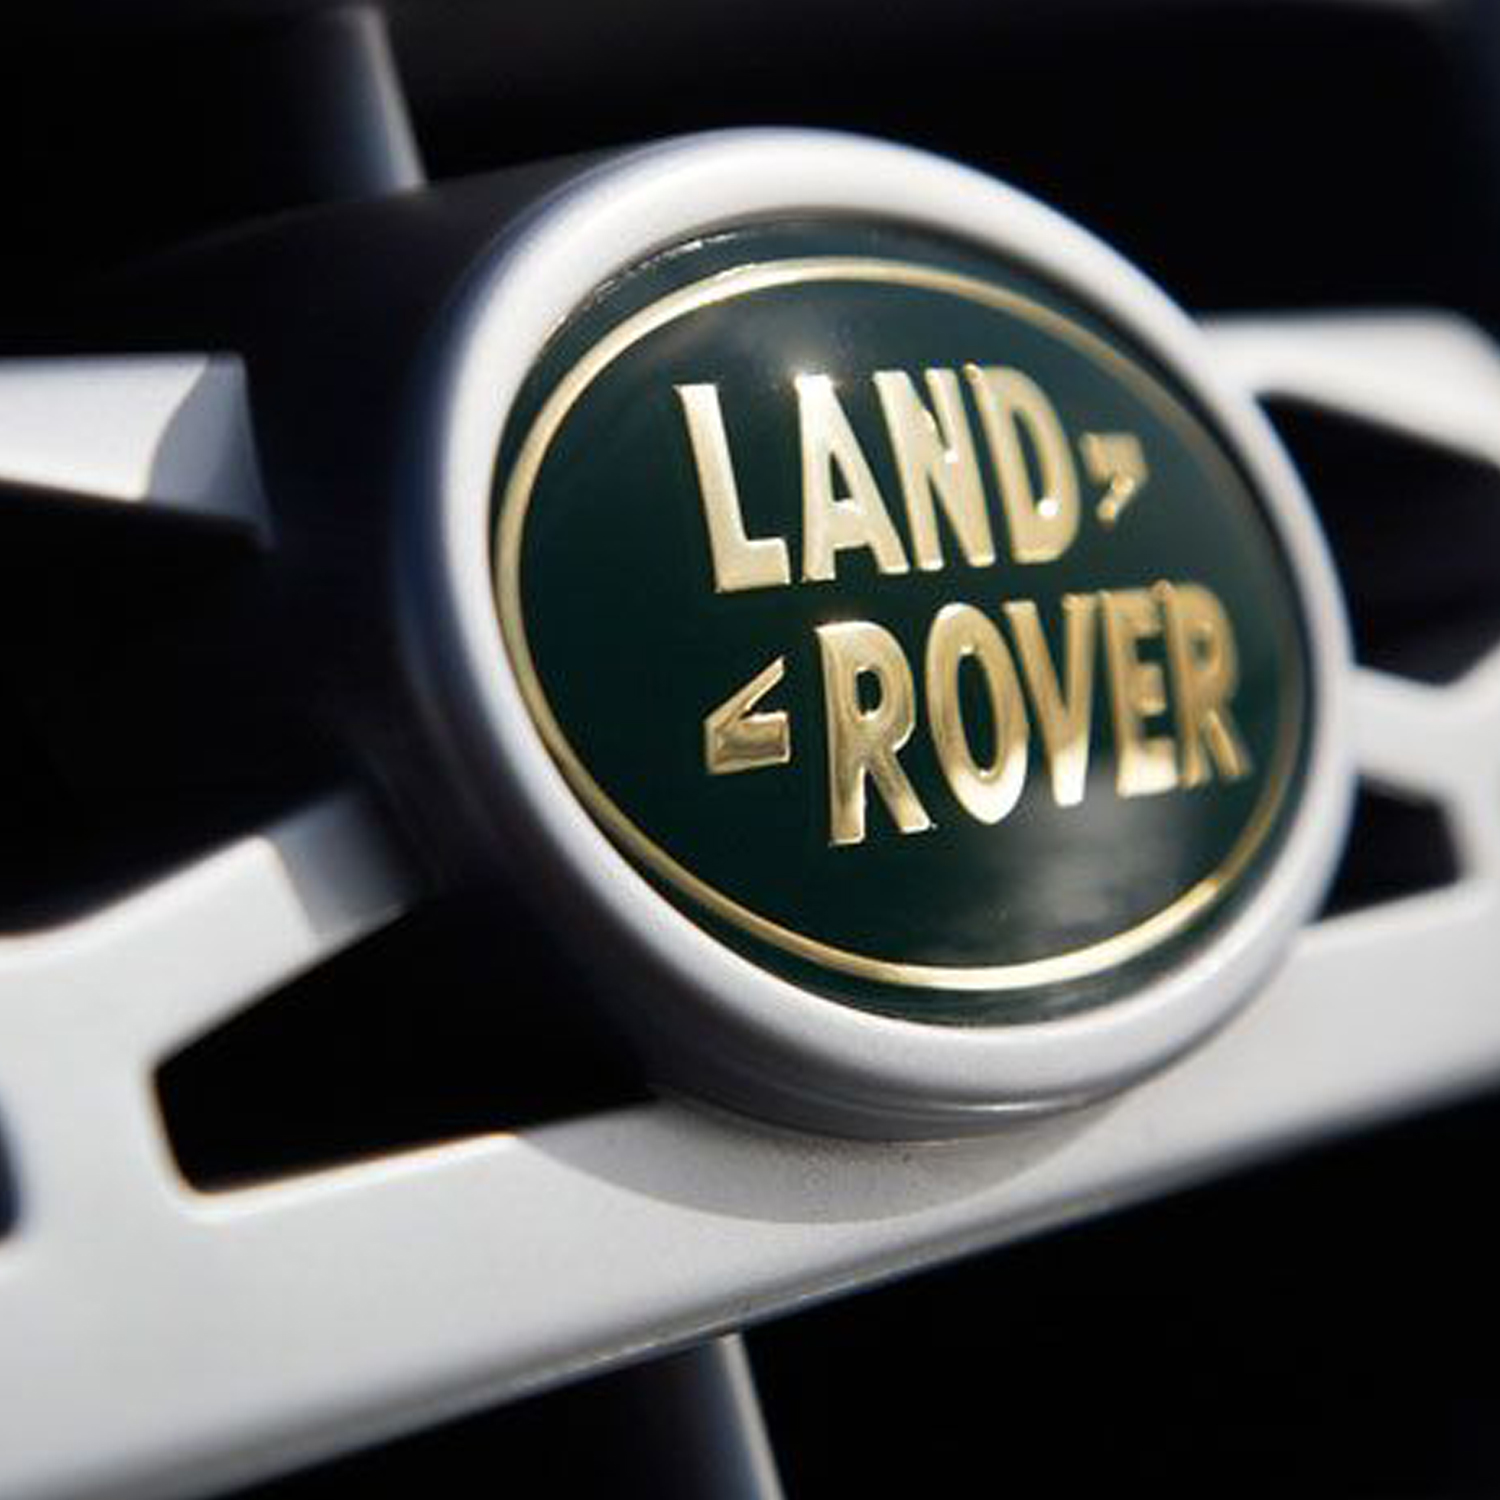 LandRover logo car emblem